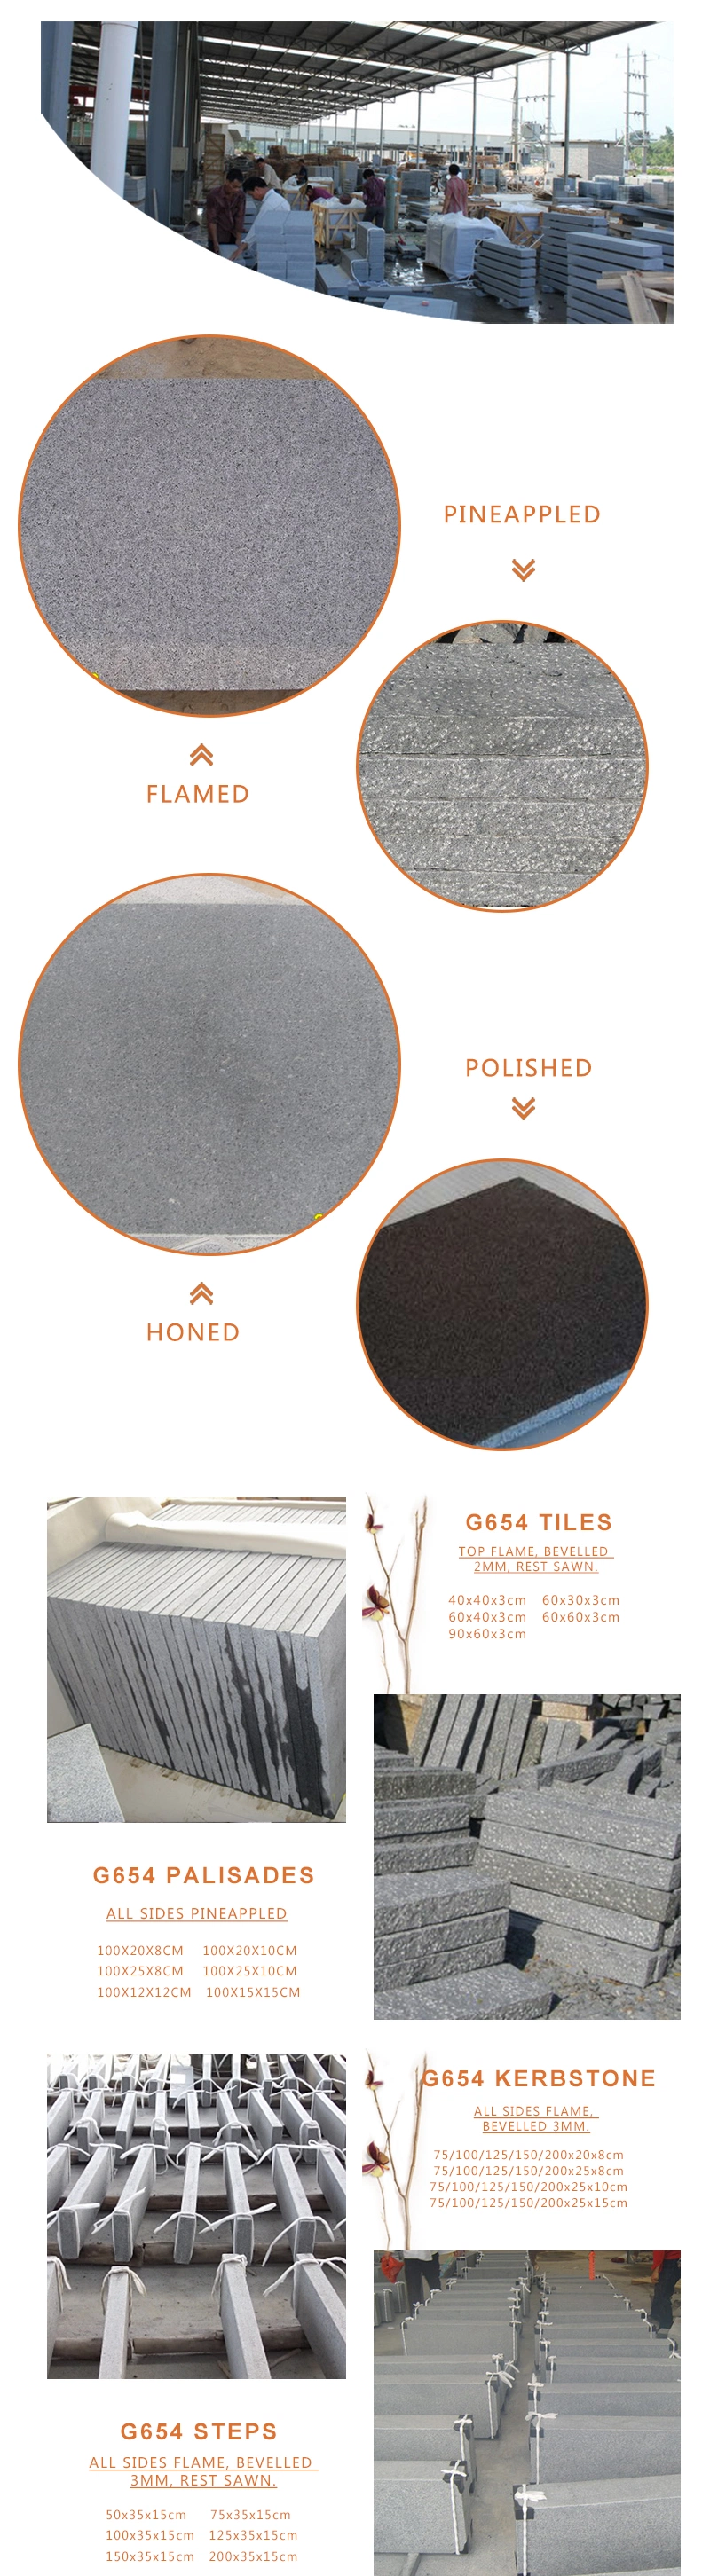 G655 Granite Stone/Grey Granite Tiles for Paving/Kerbstone/Wall Cladding